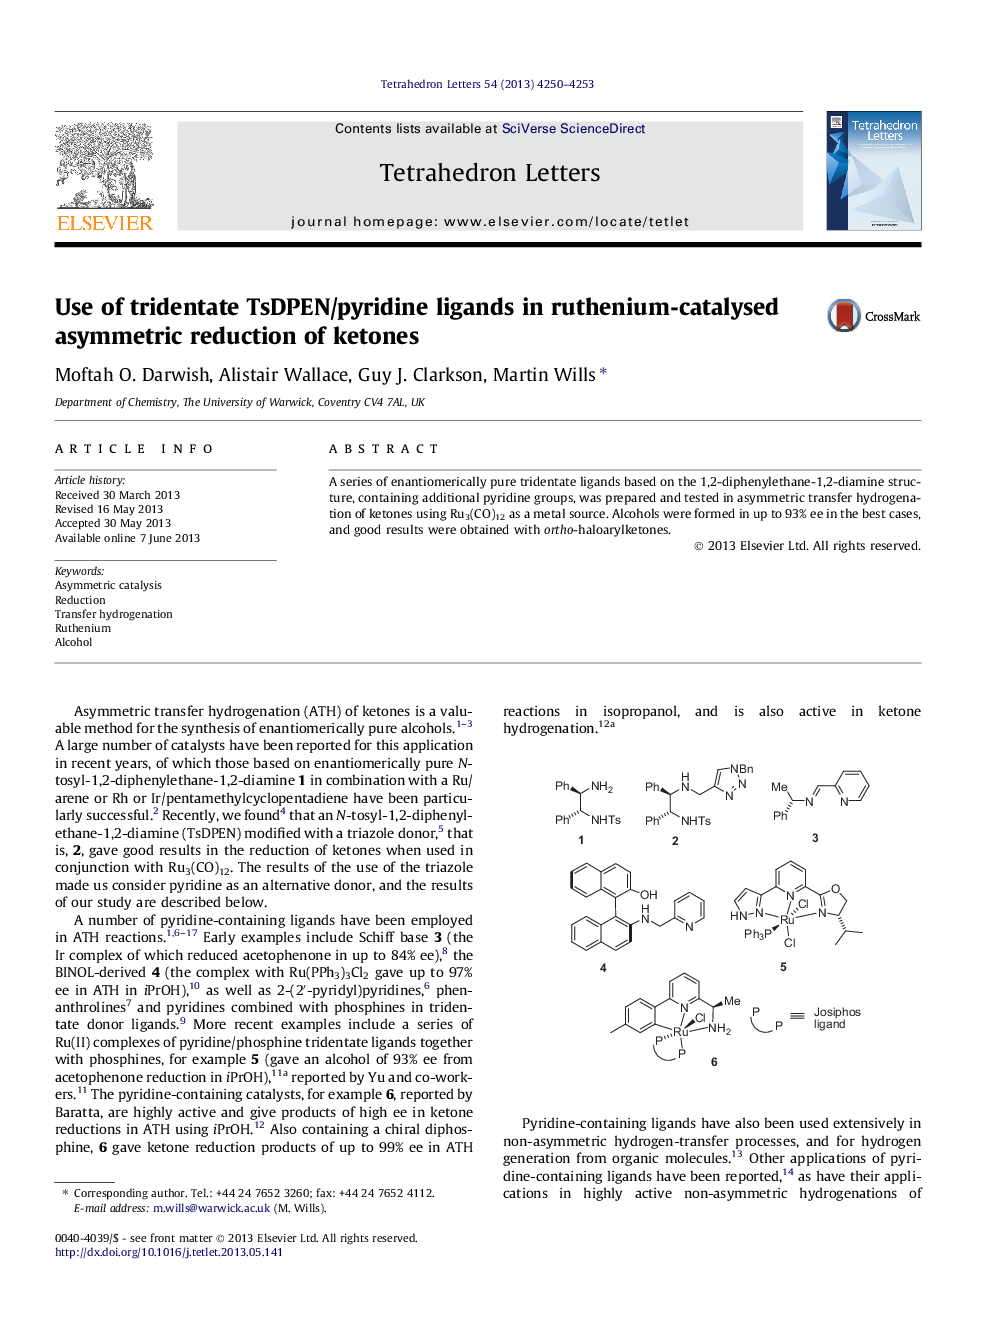 Use of tridentate TsDPEN/pyridine ligands in ruthenium-catalysed asymmetric reduction of ketones